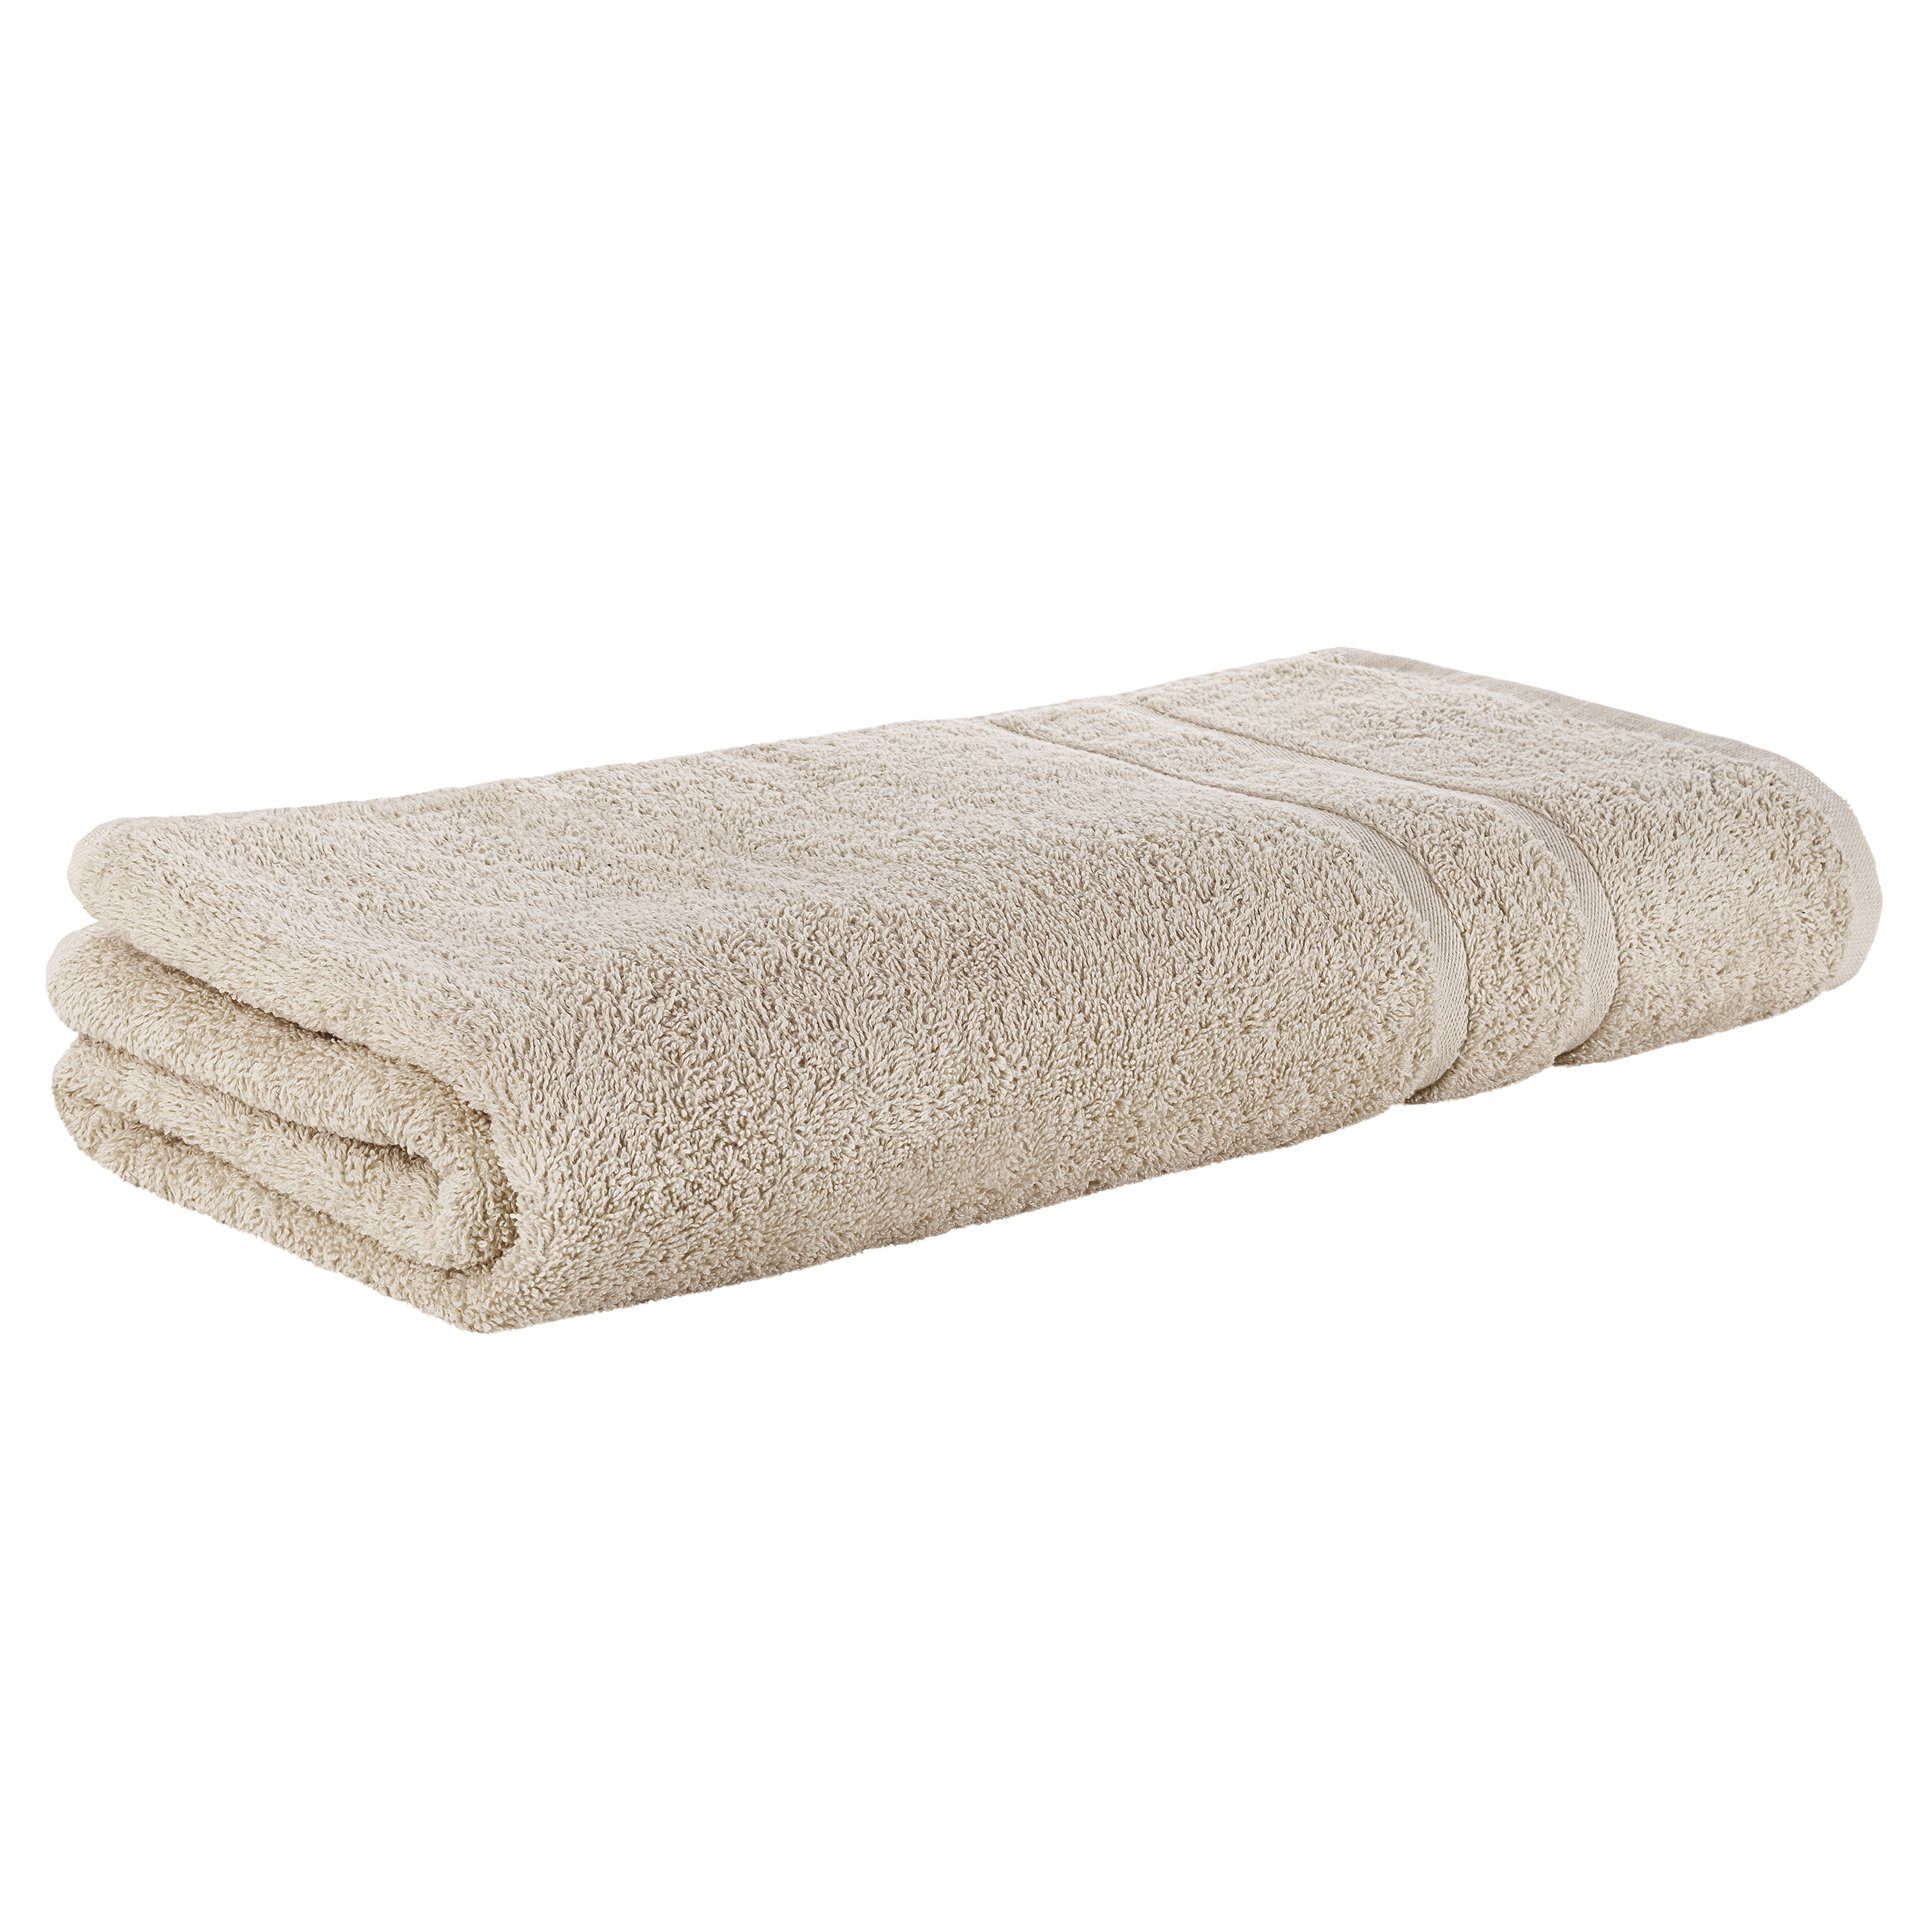 Saunatücher in Wahl 100% Badetücher Sand Gästehandtücher Handtücher 500 Baumwolle zur Handtuch GSM StickandShine Duschtücher